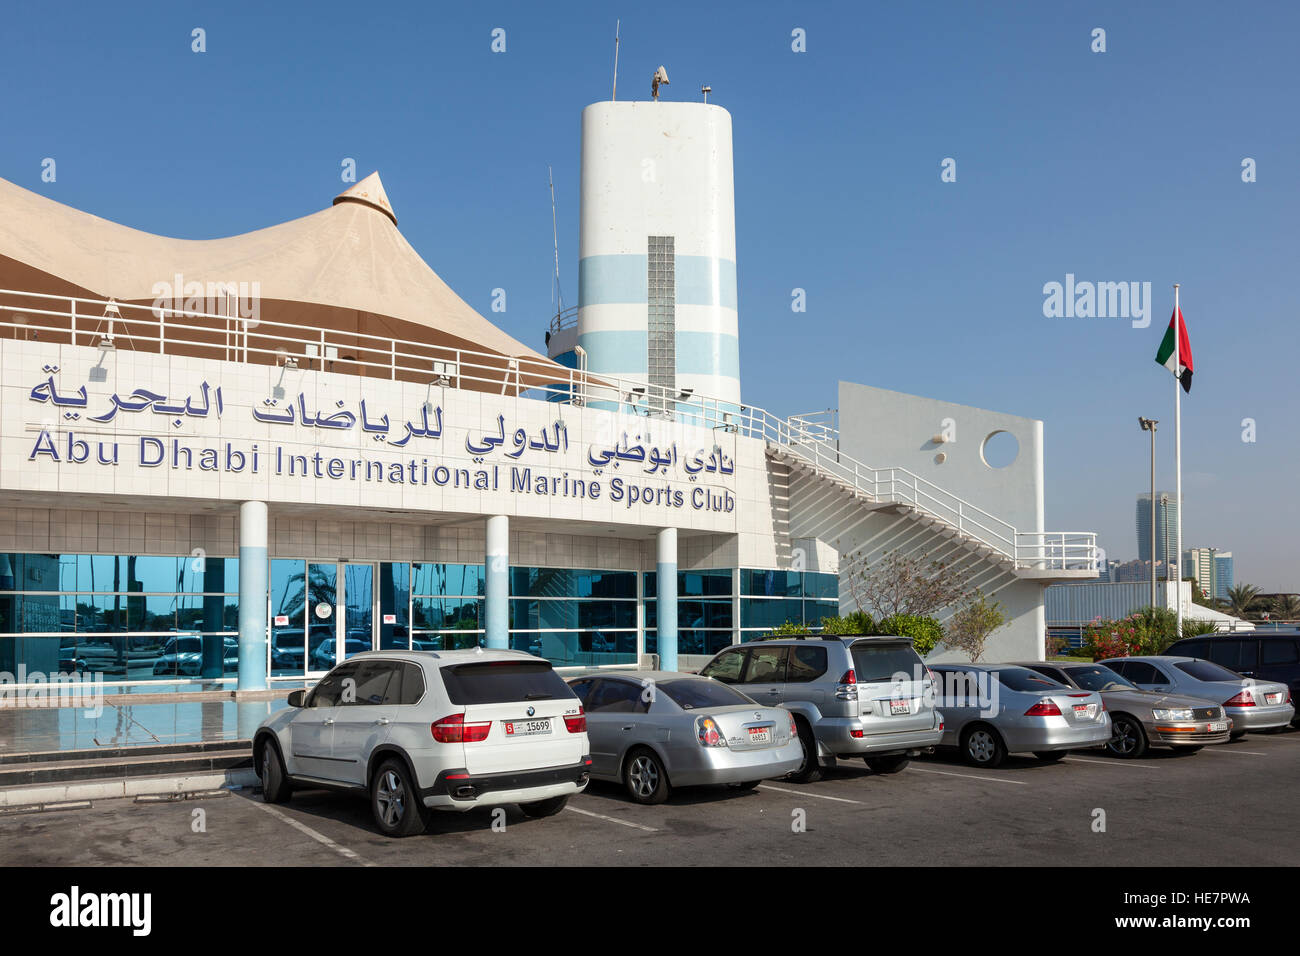 Abu Dhabi International Marine Sports Club Banque D'Images